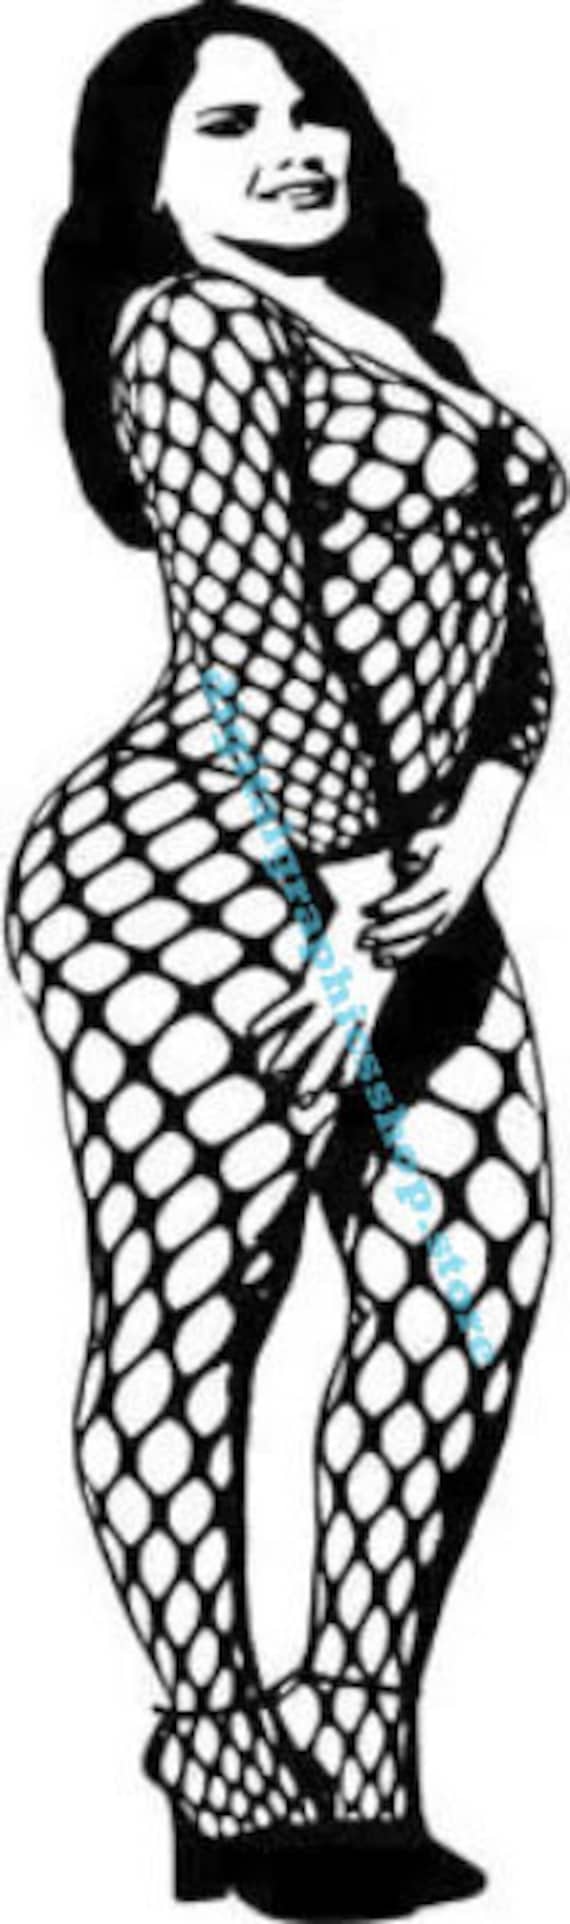 sexy babe model pinup big girl svg jpg png, black fishnet body stocking, clipart printable art ,instant download ,digital transfer image